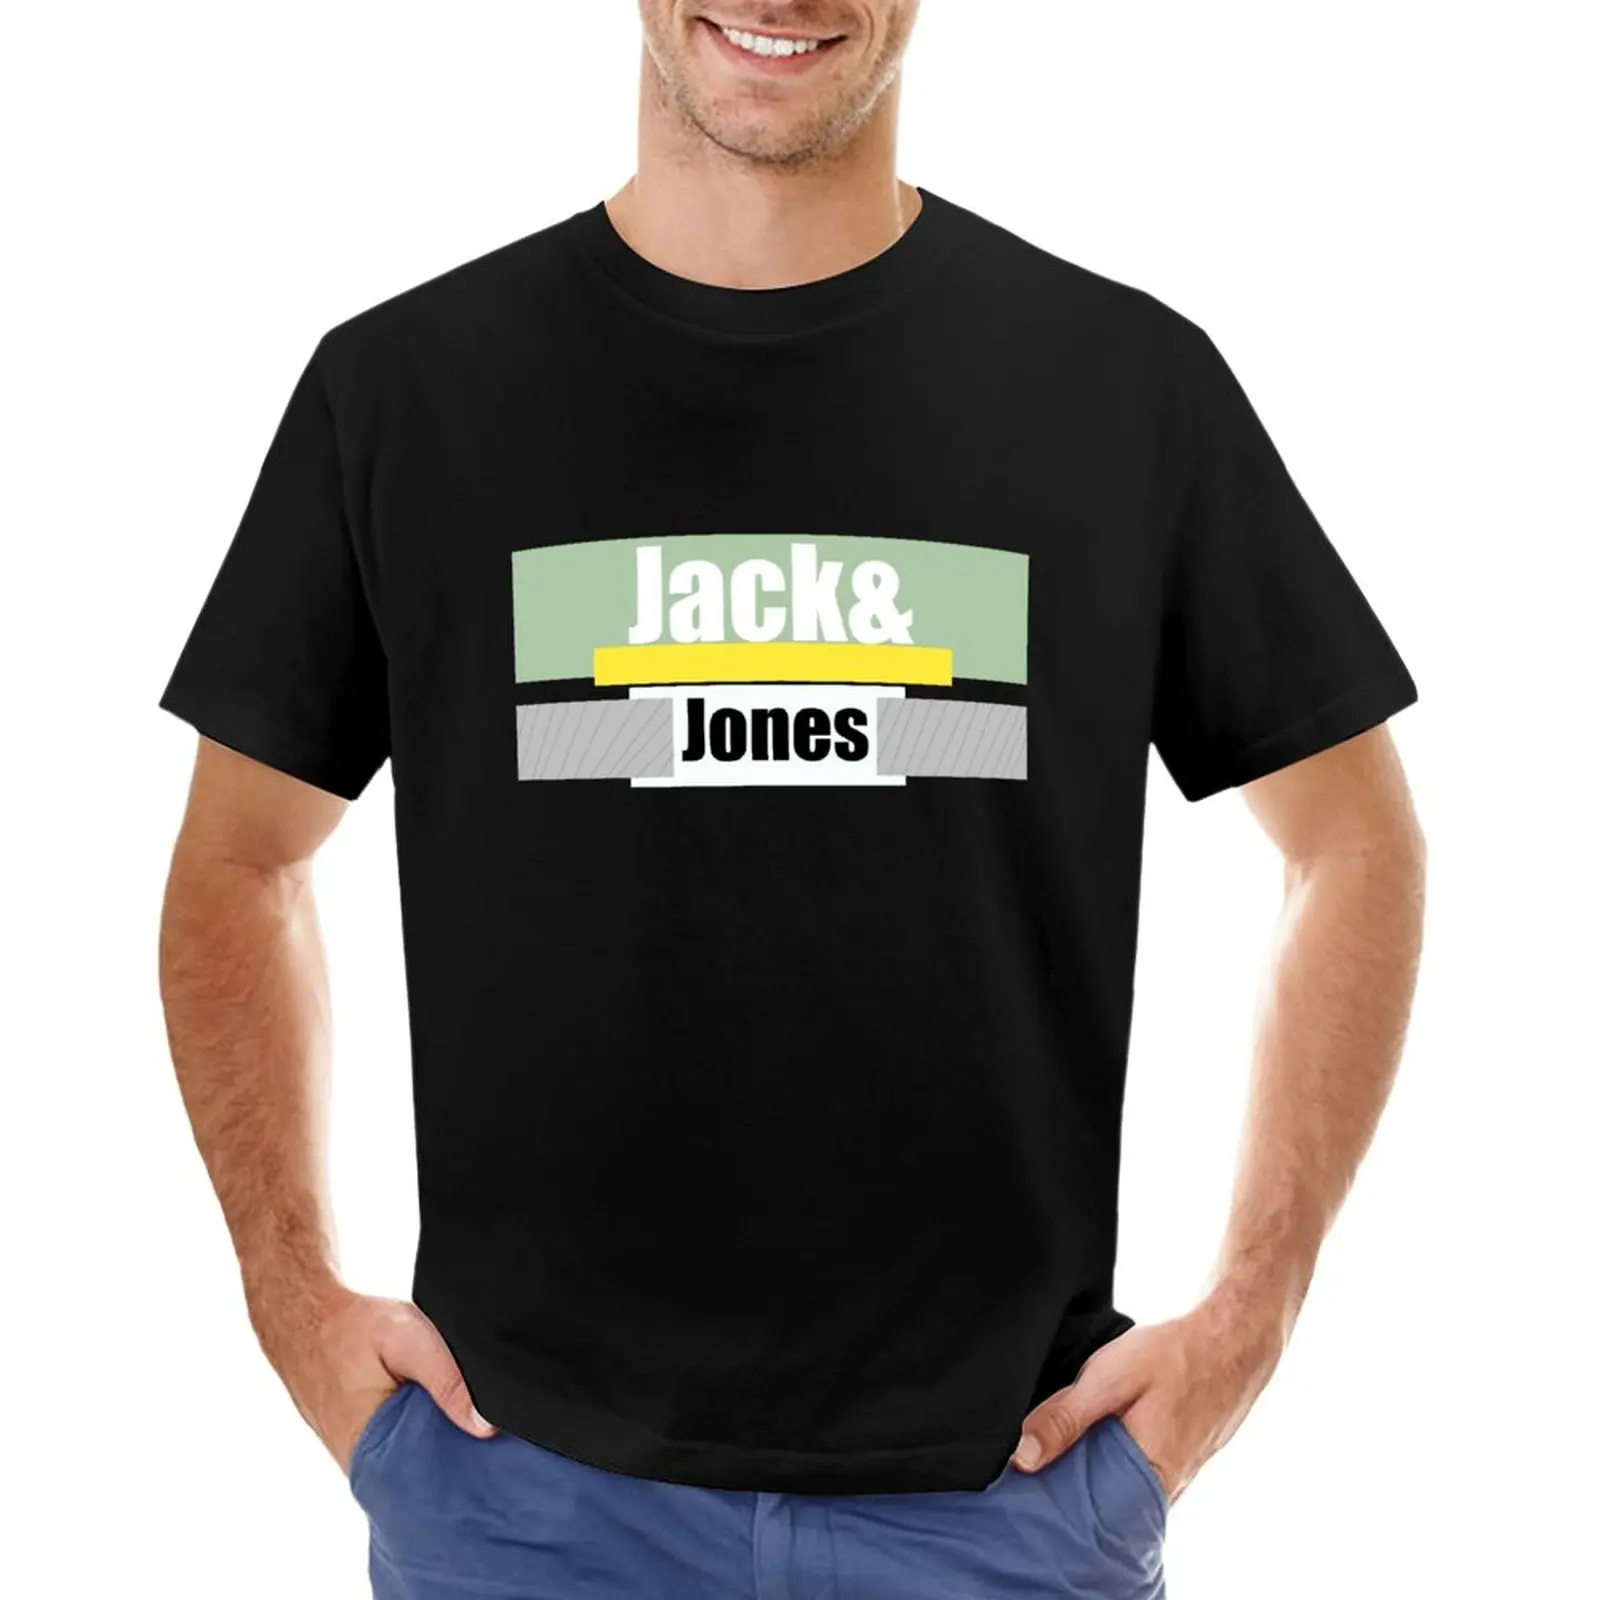 

Jack& Jones T-Shirt summer top mens graphic t-shirts